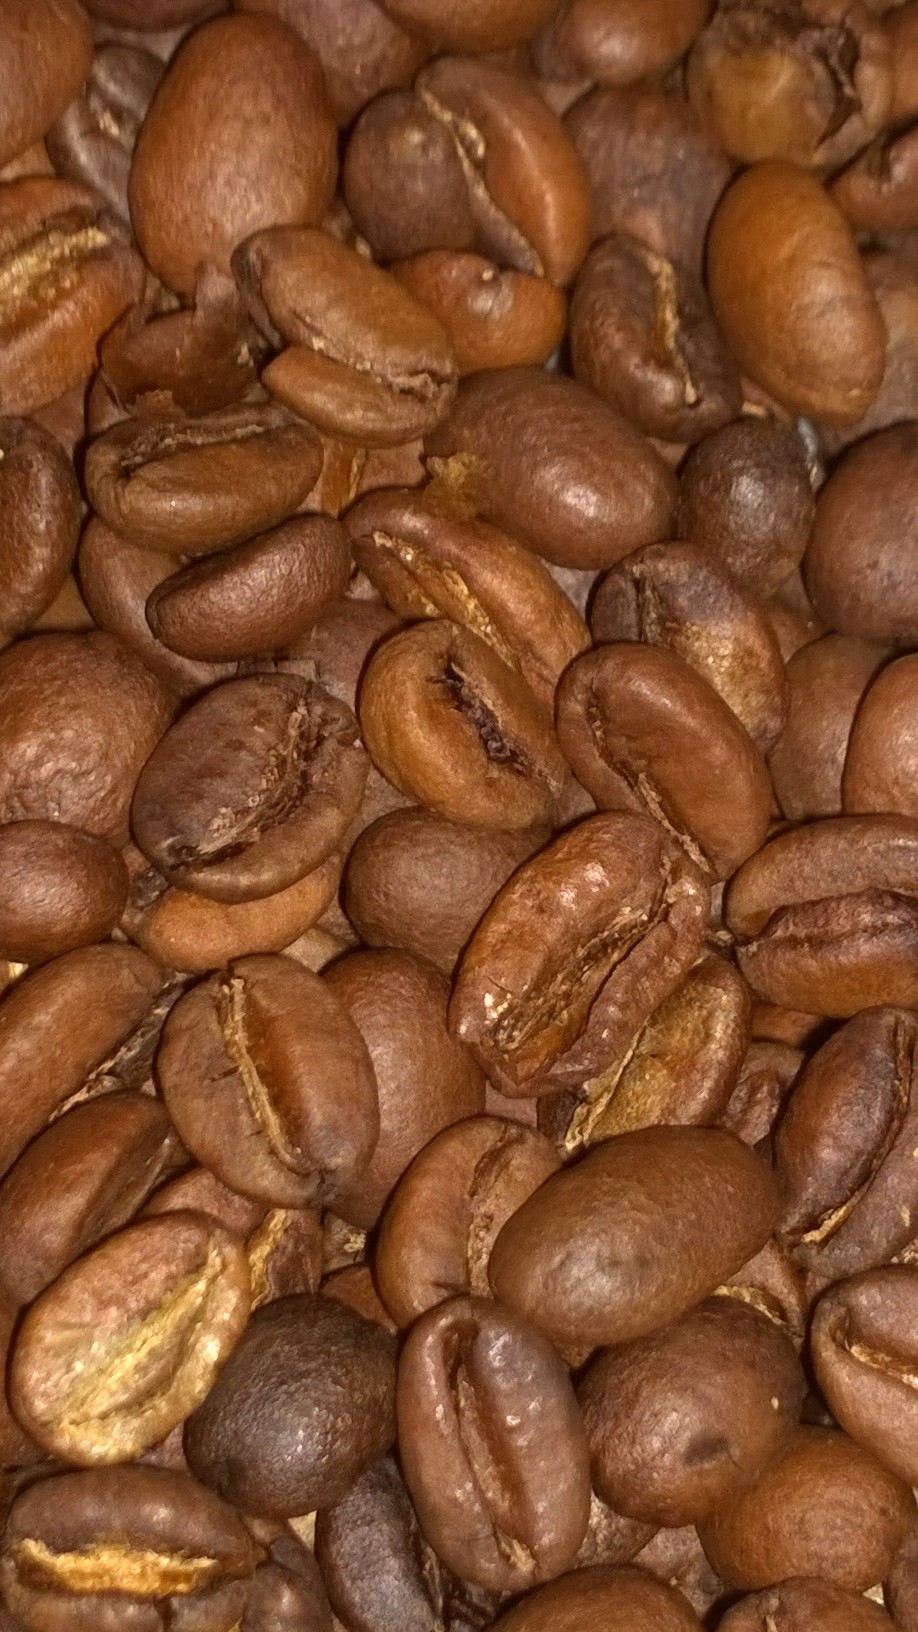 Roasted Coffee Beans Ethiopia Sidama Guji 5 pounds